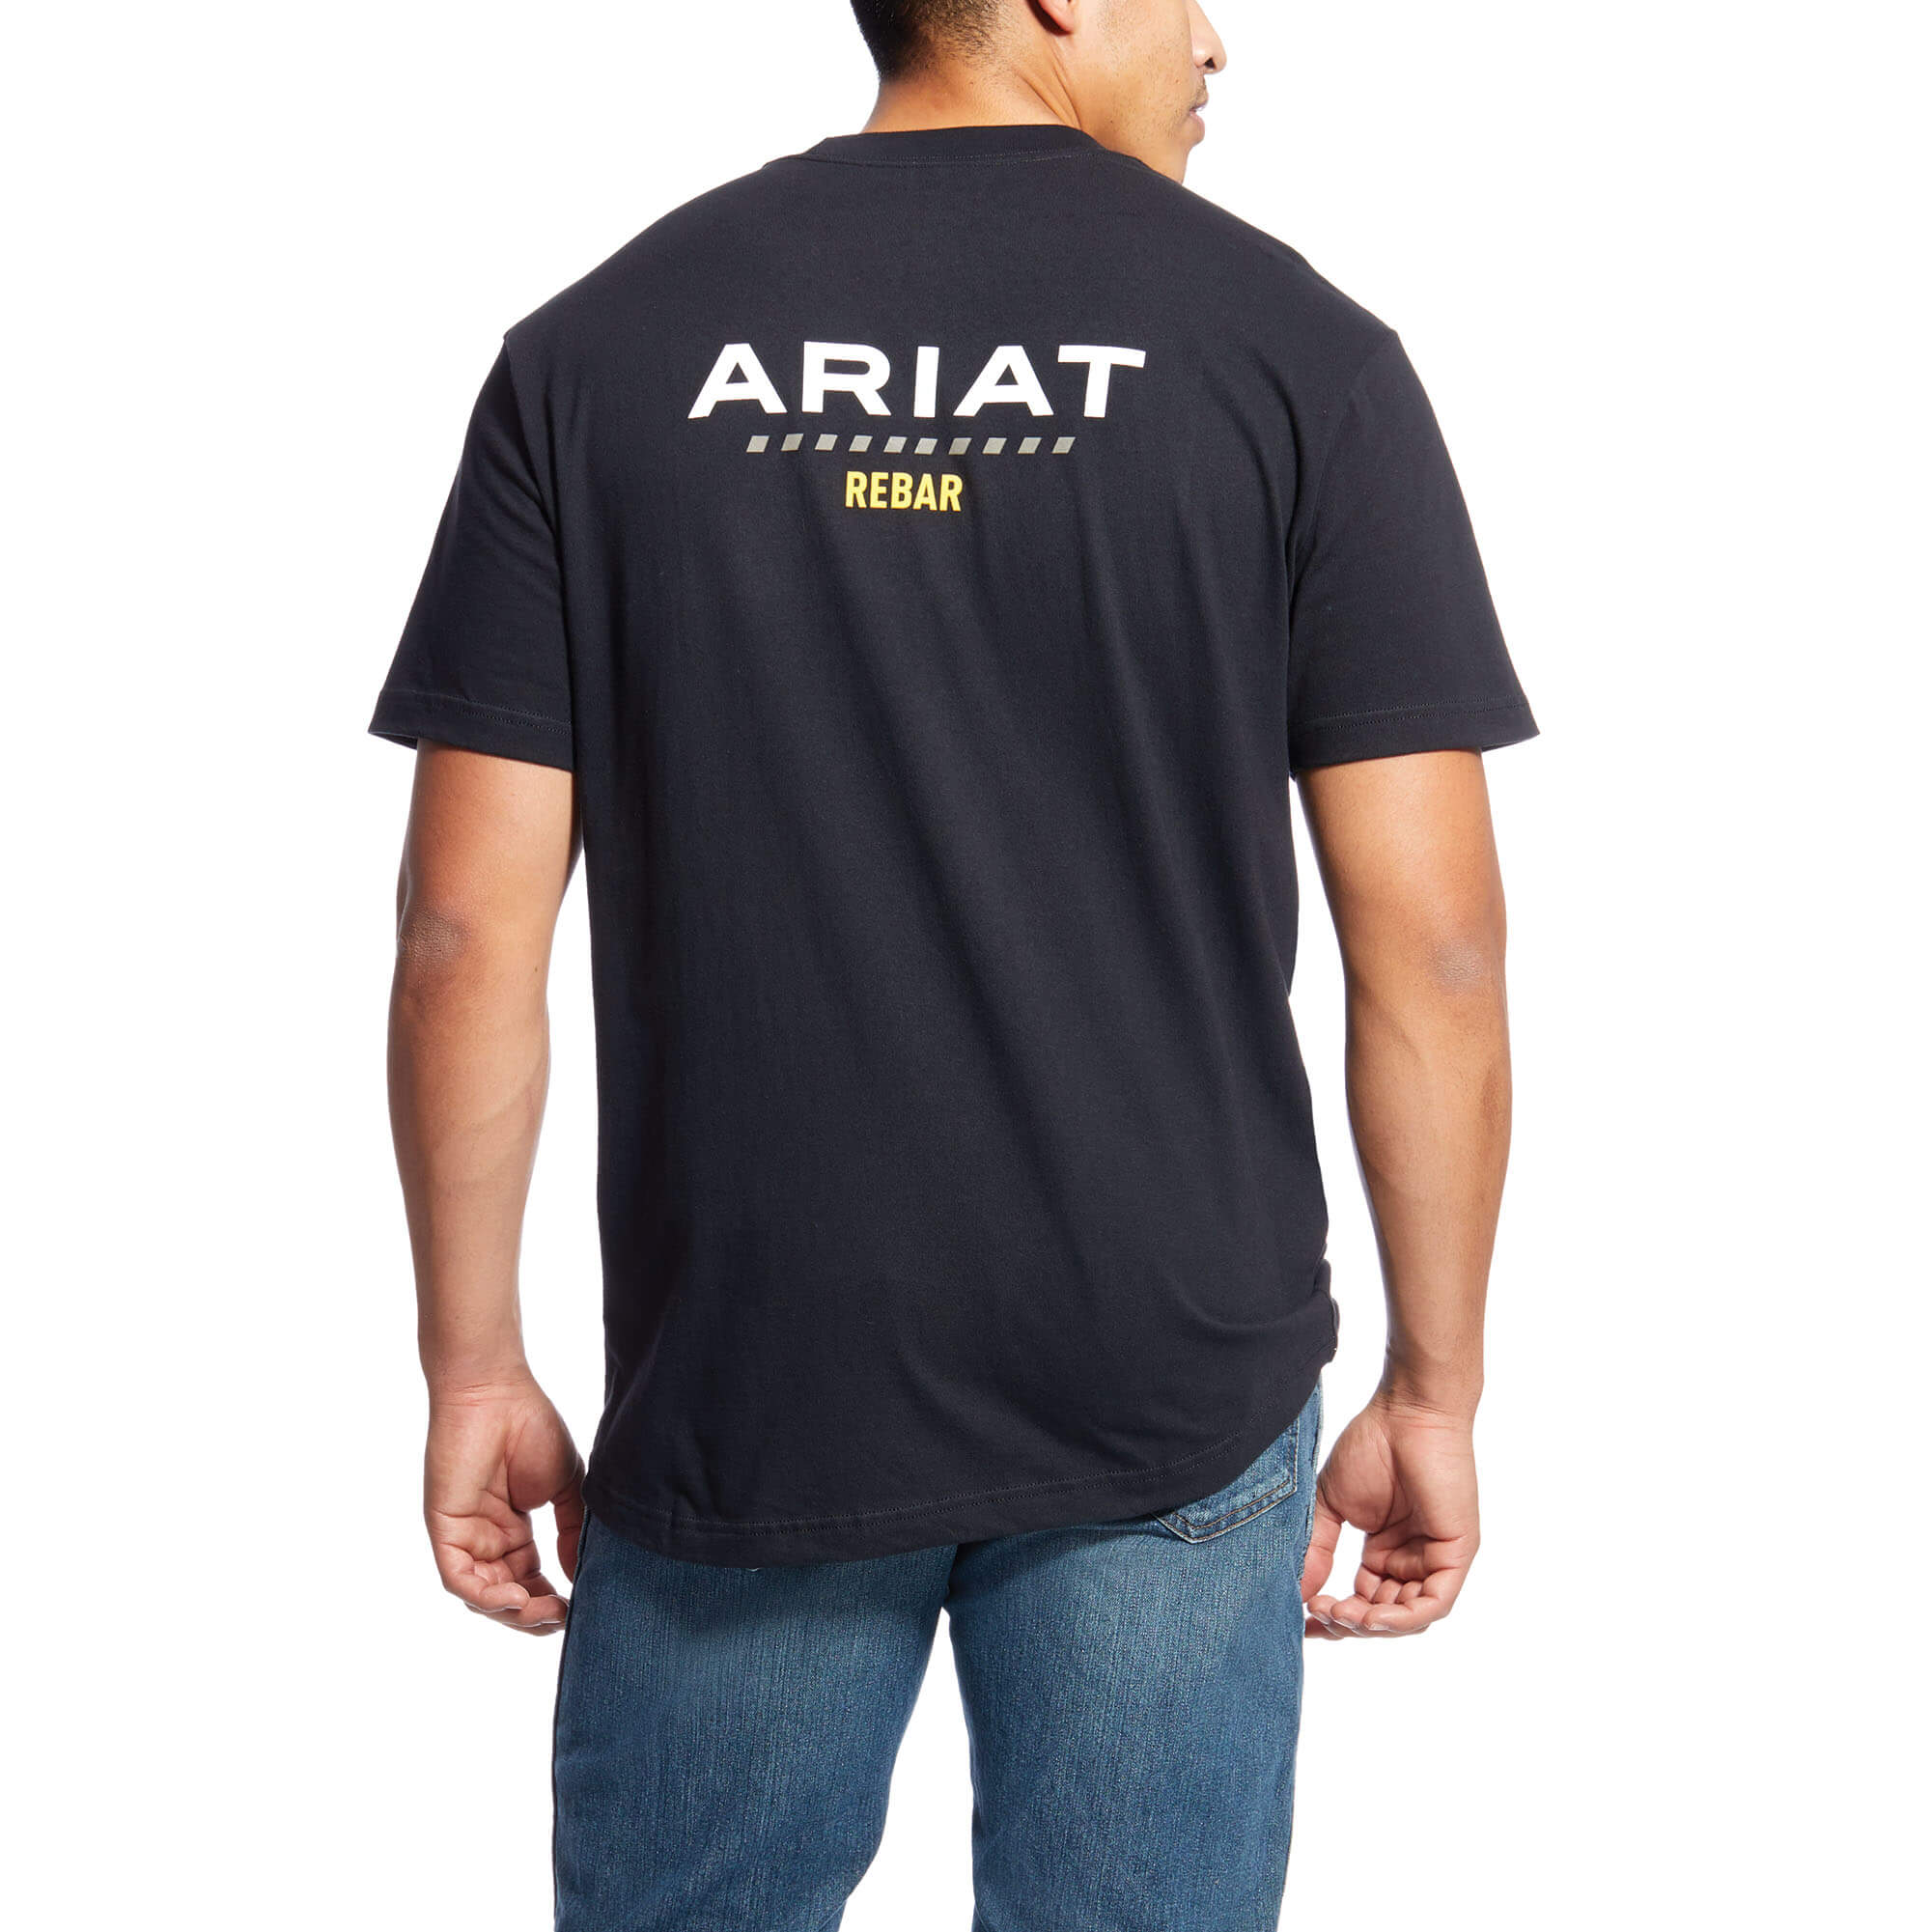 Ariat Rebar CottonStrong Logo Tee